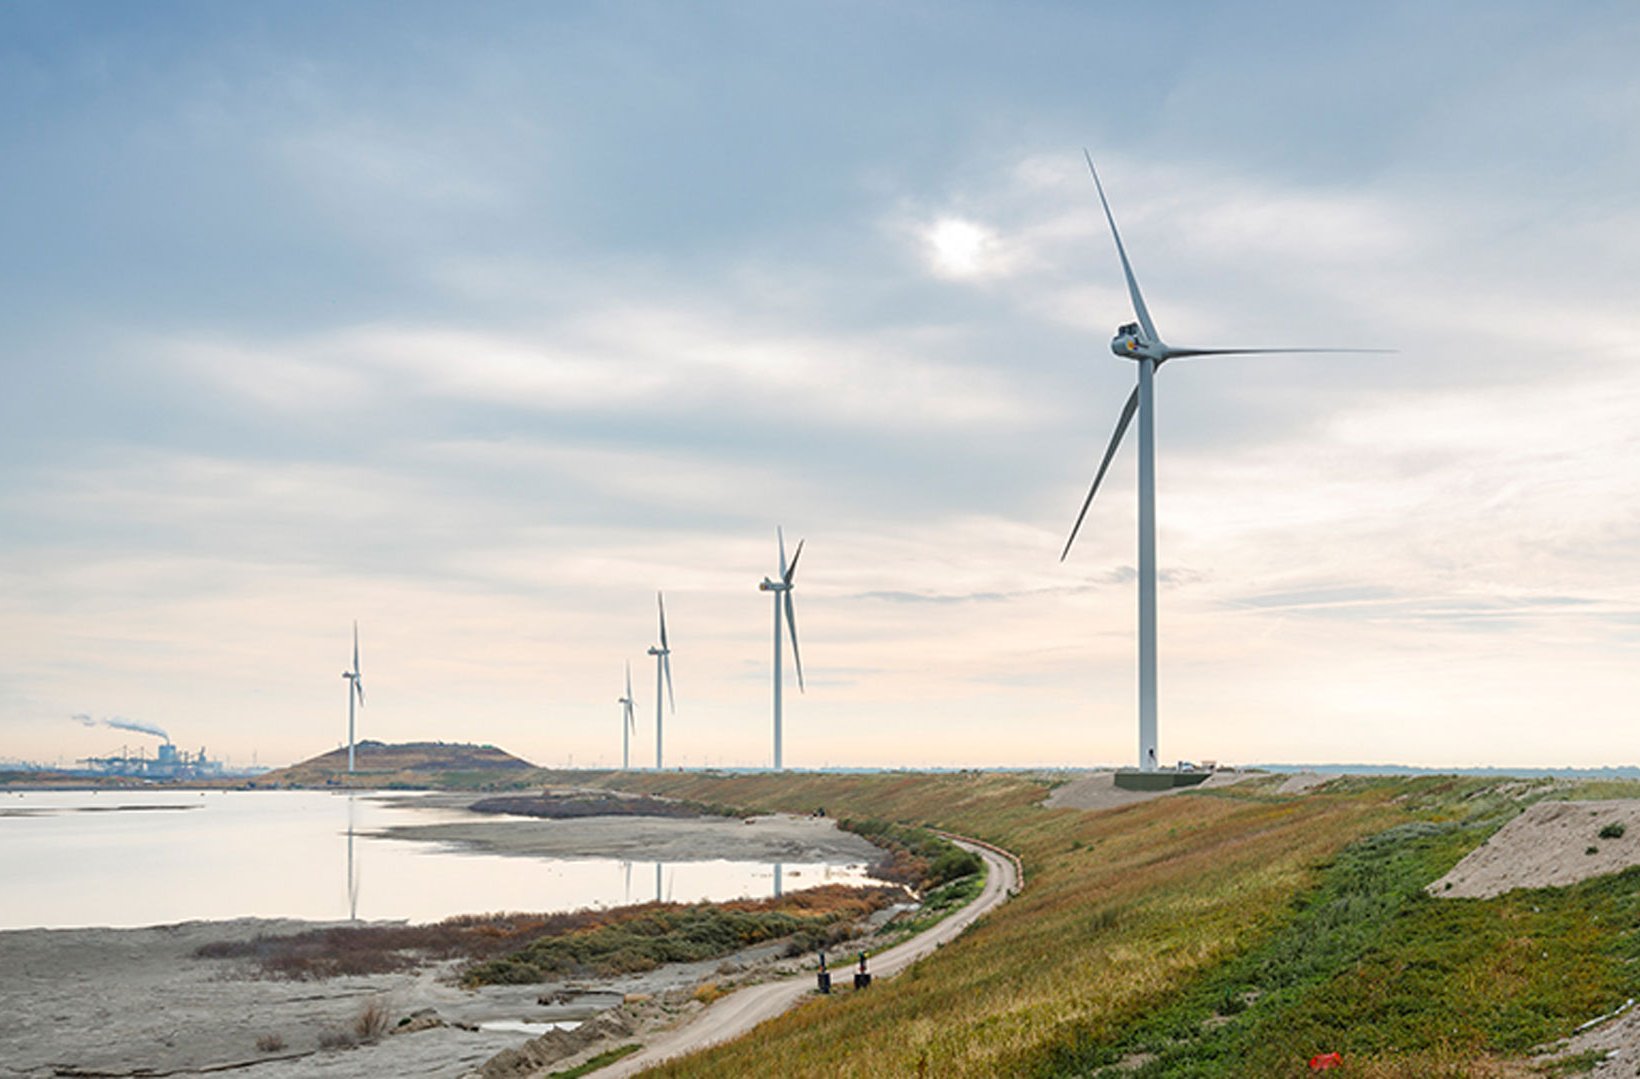 Slufterdam wind farm in the Netherlands